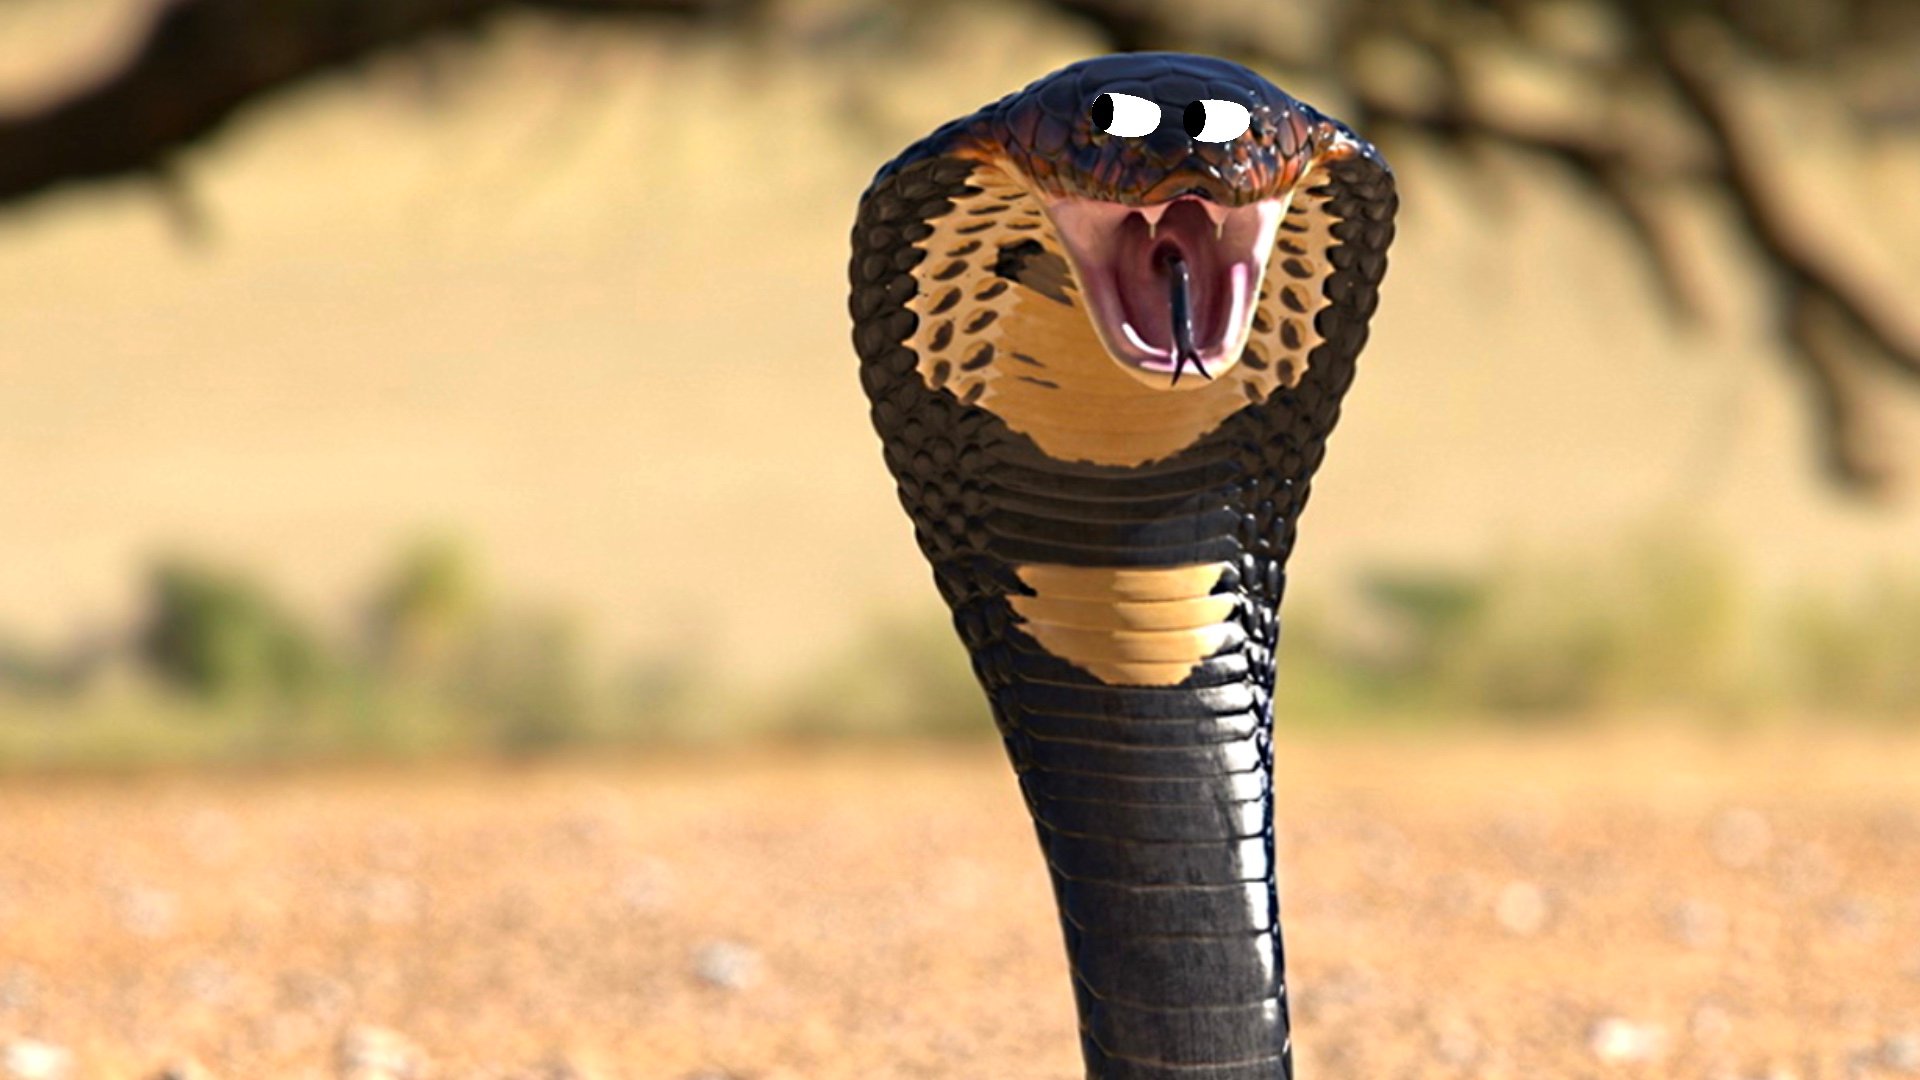 A king cobra rearing